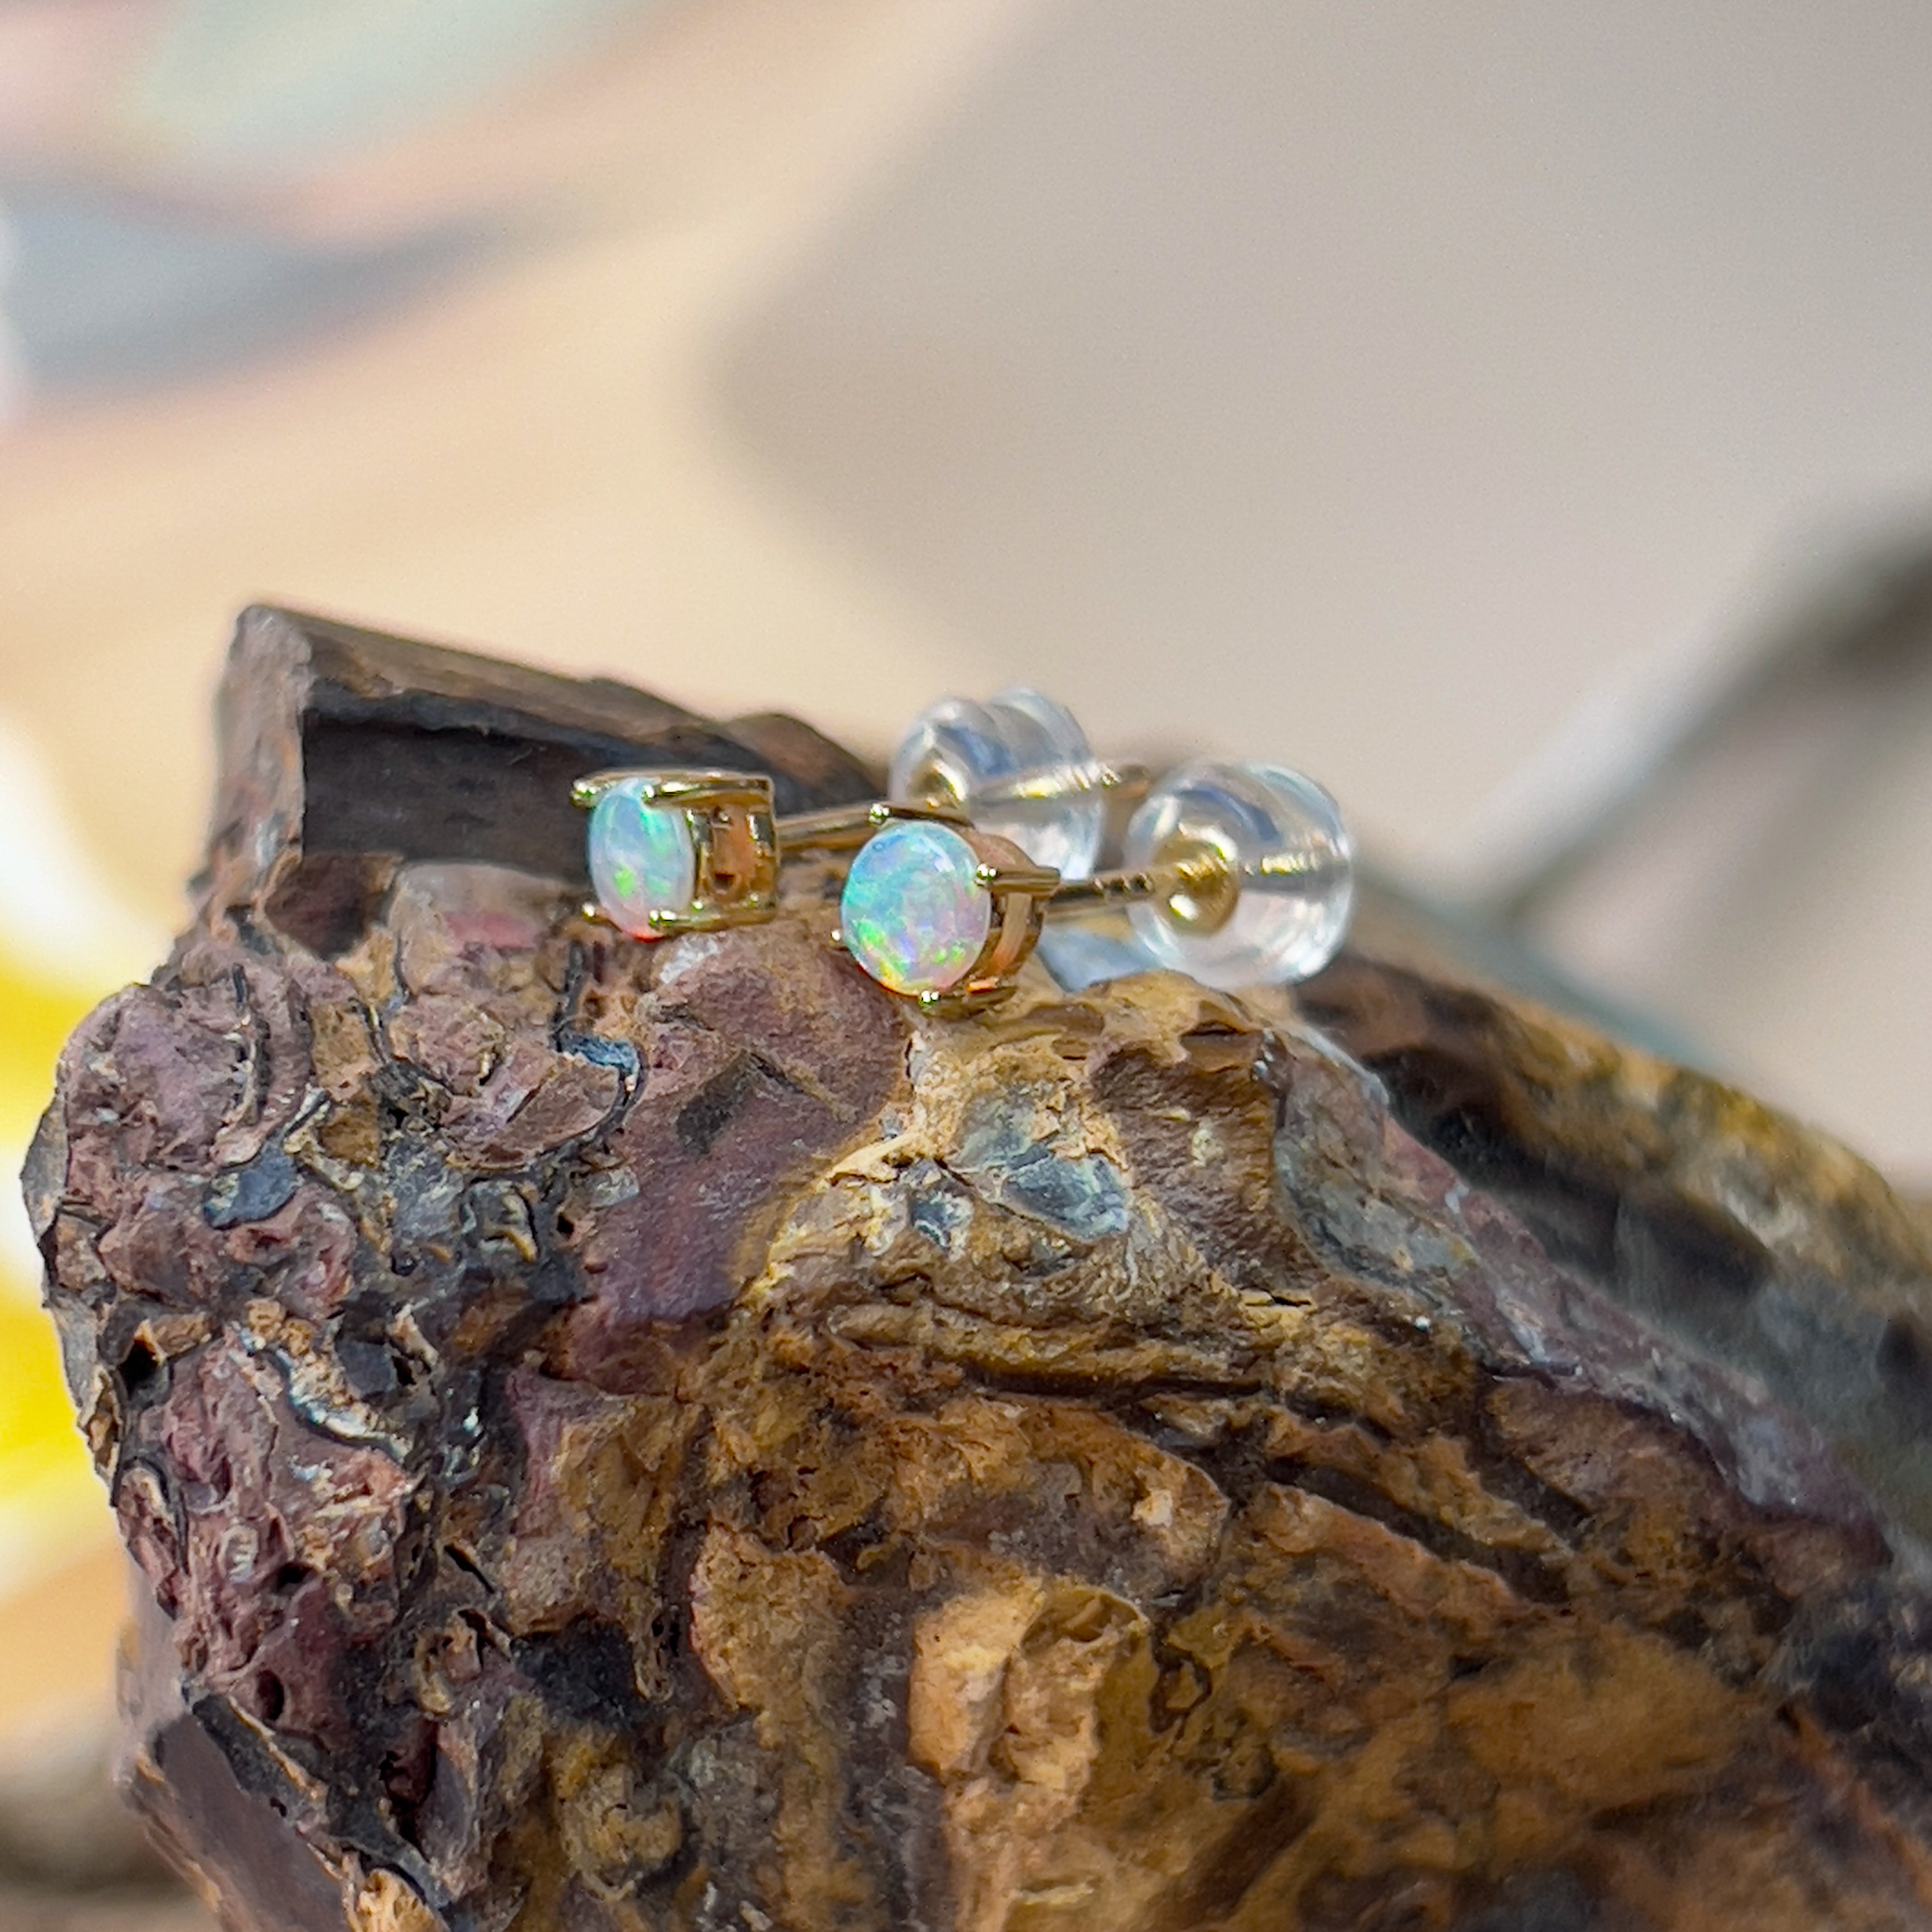 9kt Yellow Gold pair of 3.5mm Crystal Opal earrings studs - Masterpiece Jewellery Opal & Gems Sydney Australia | Online Shop